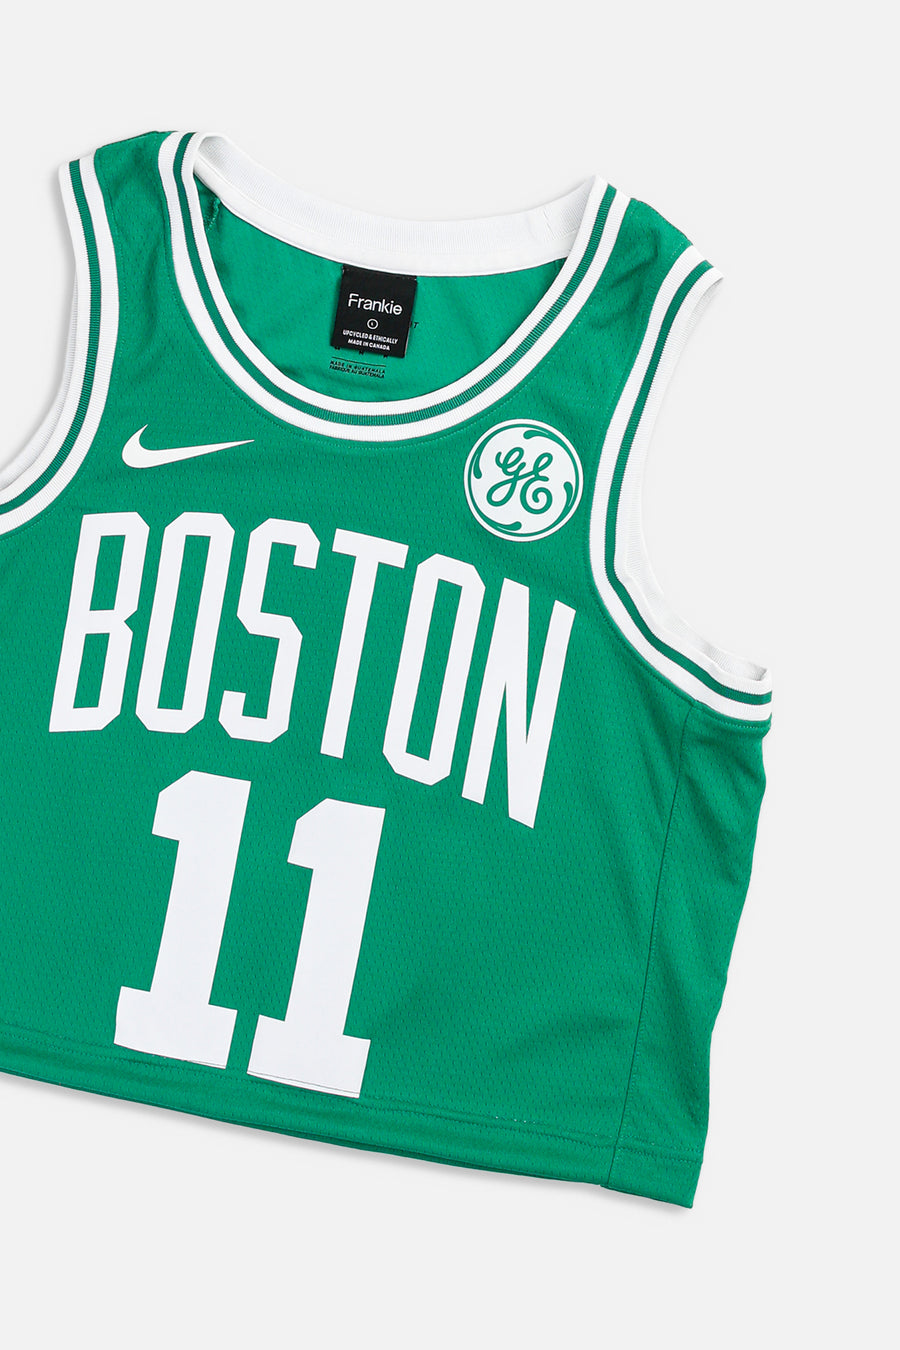 Rework Boston Celtics NBA Crop Jersey - L